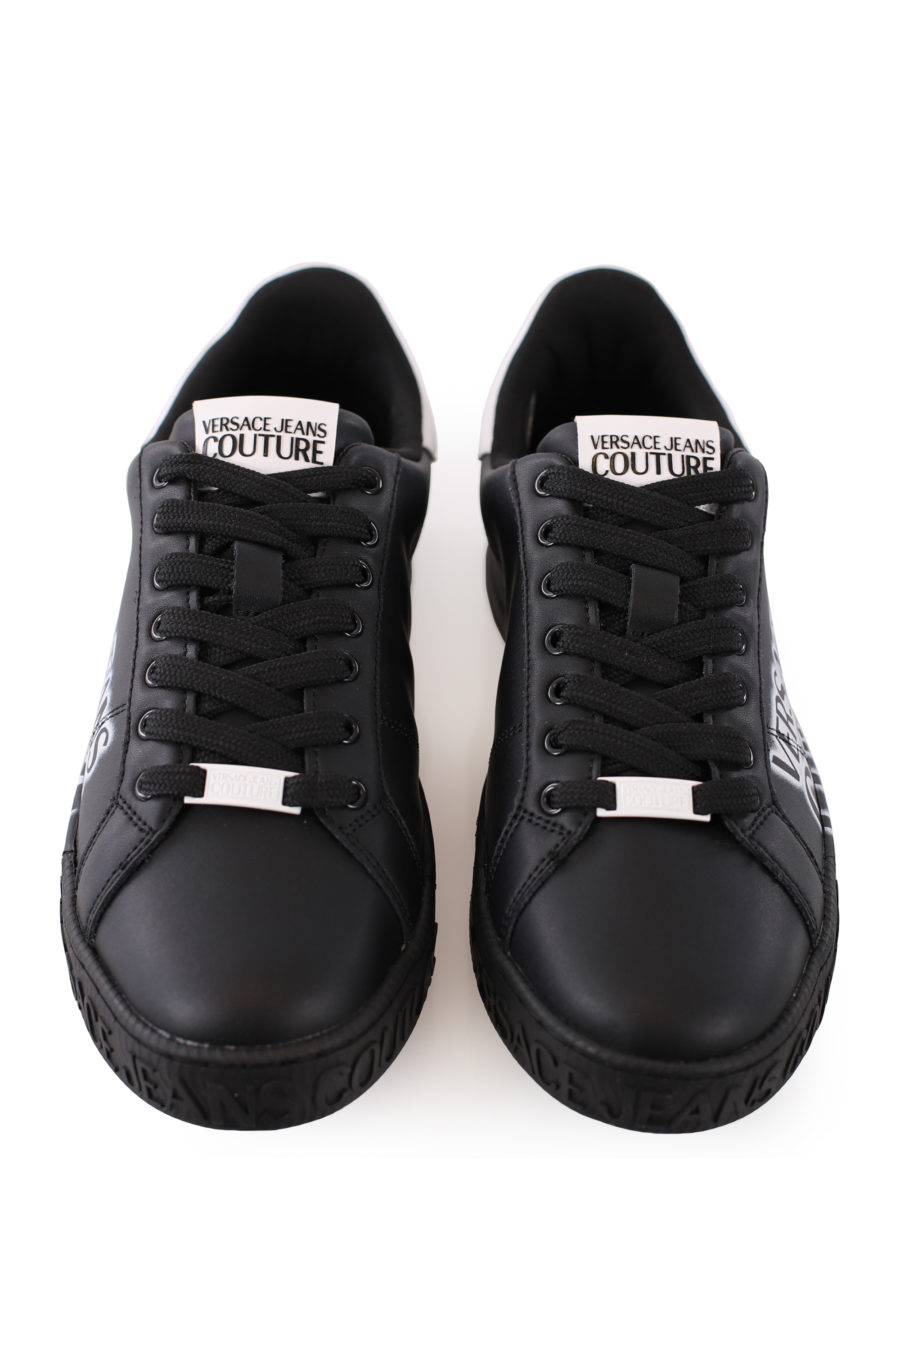 Zapatillas negras "Court 88" con logotipo blanco - IMG 8991